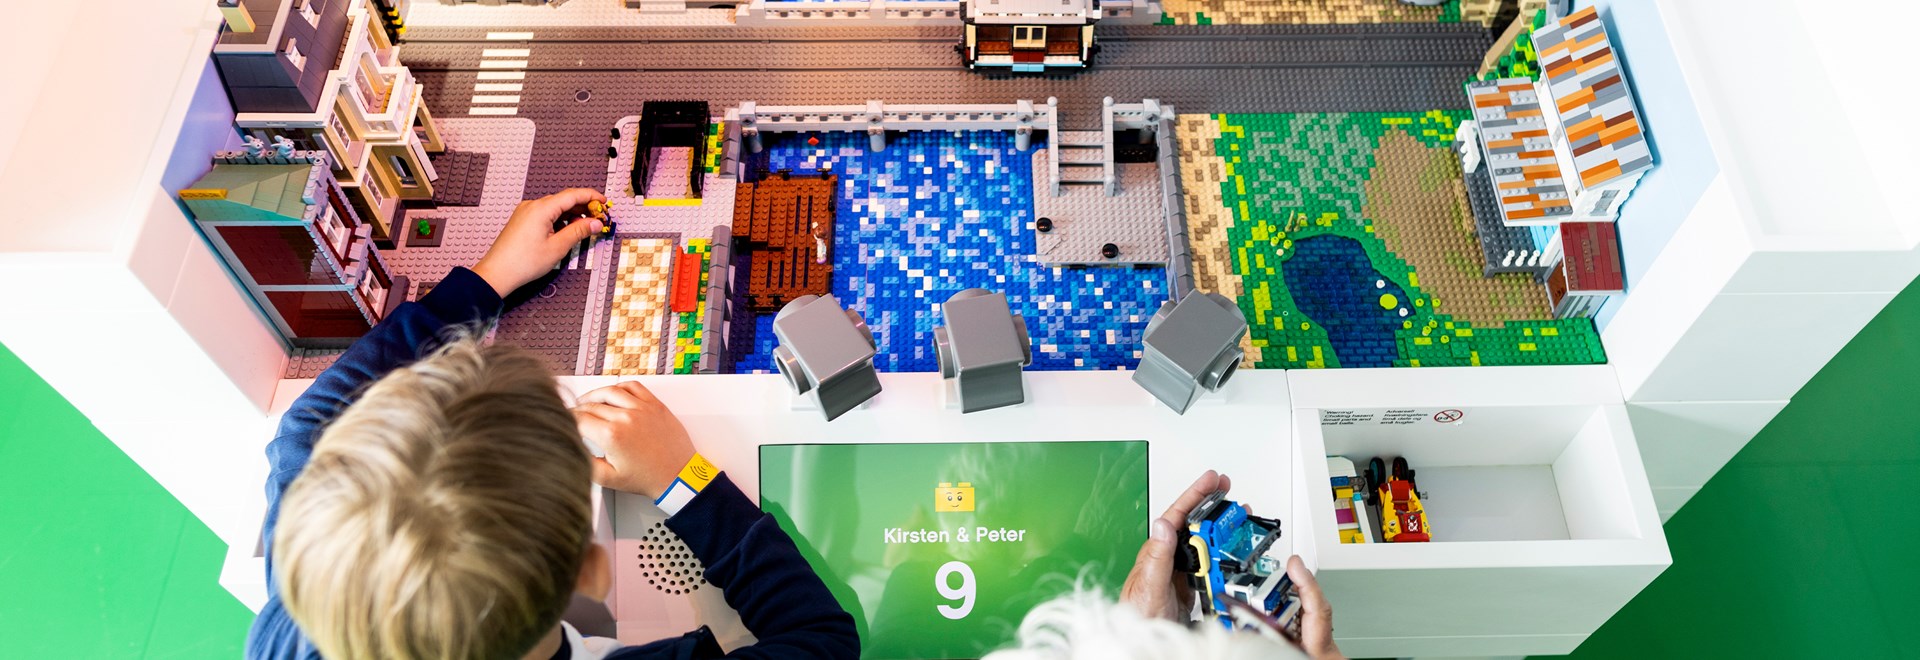 LEGO House oplevelser - Grøn Zone